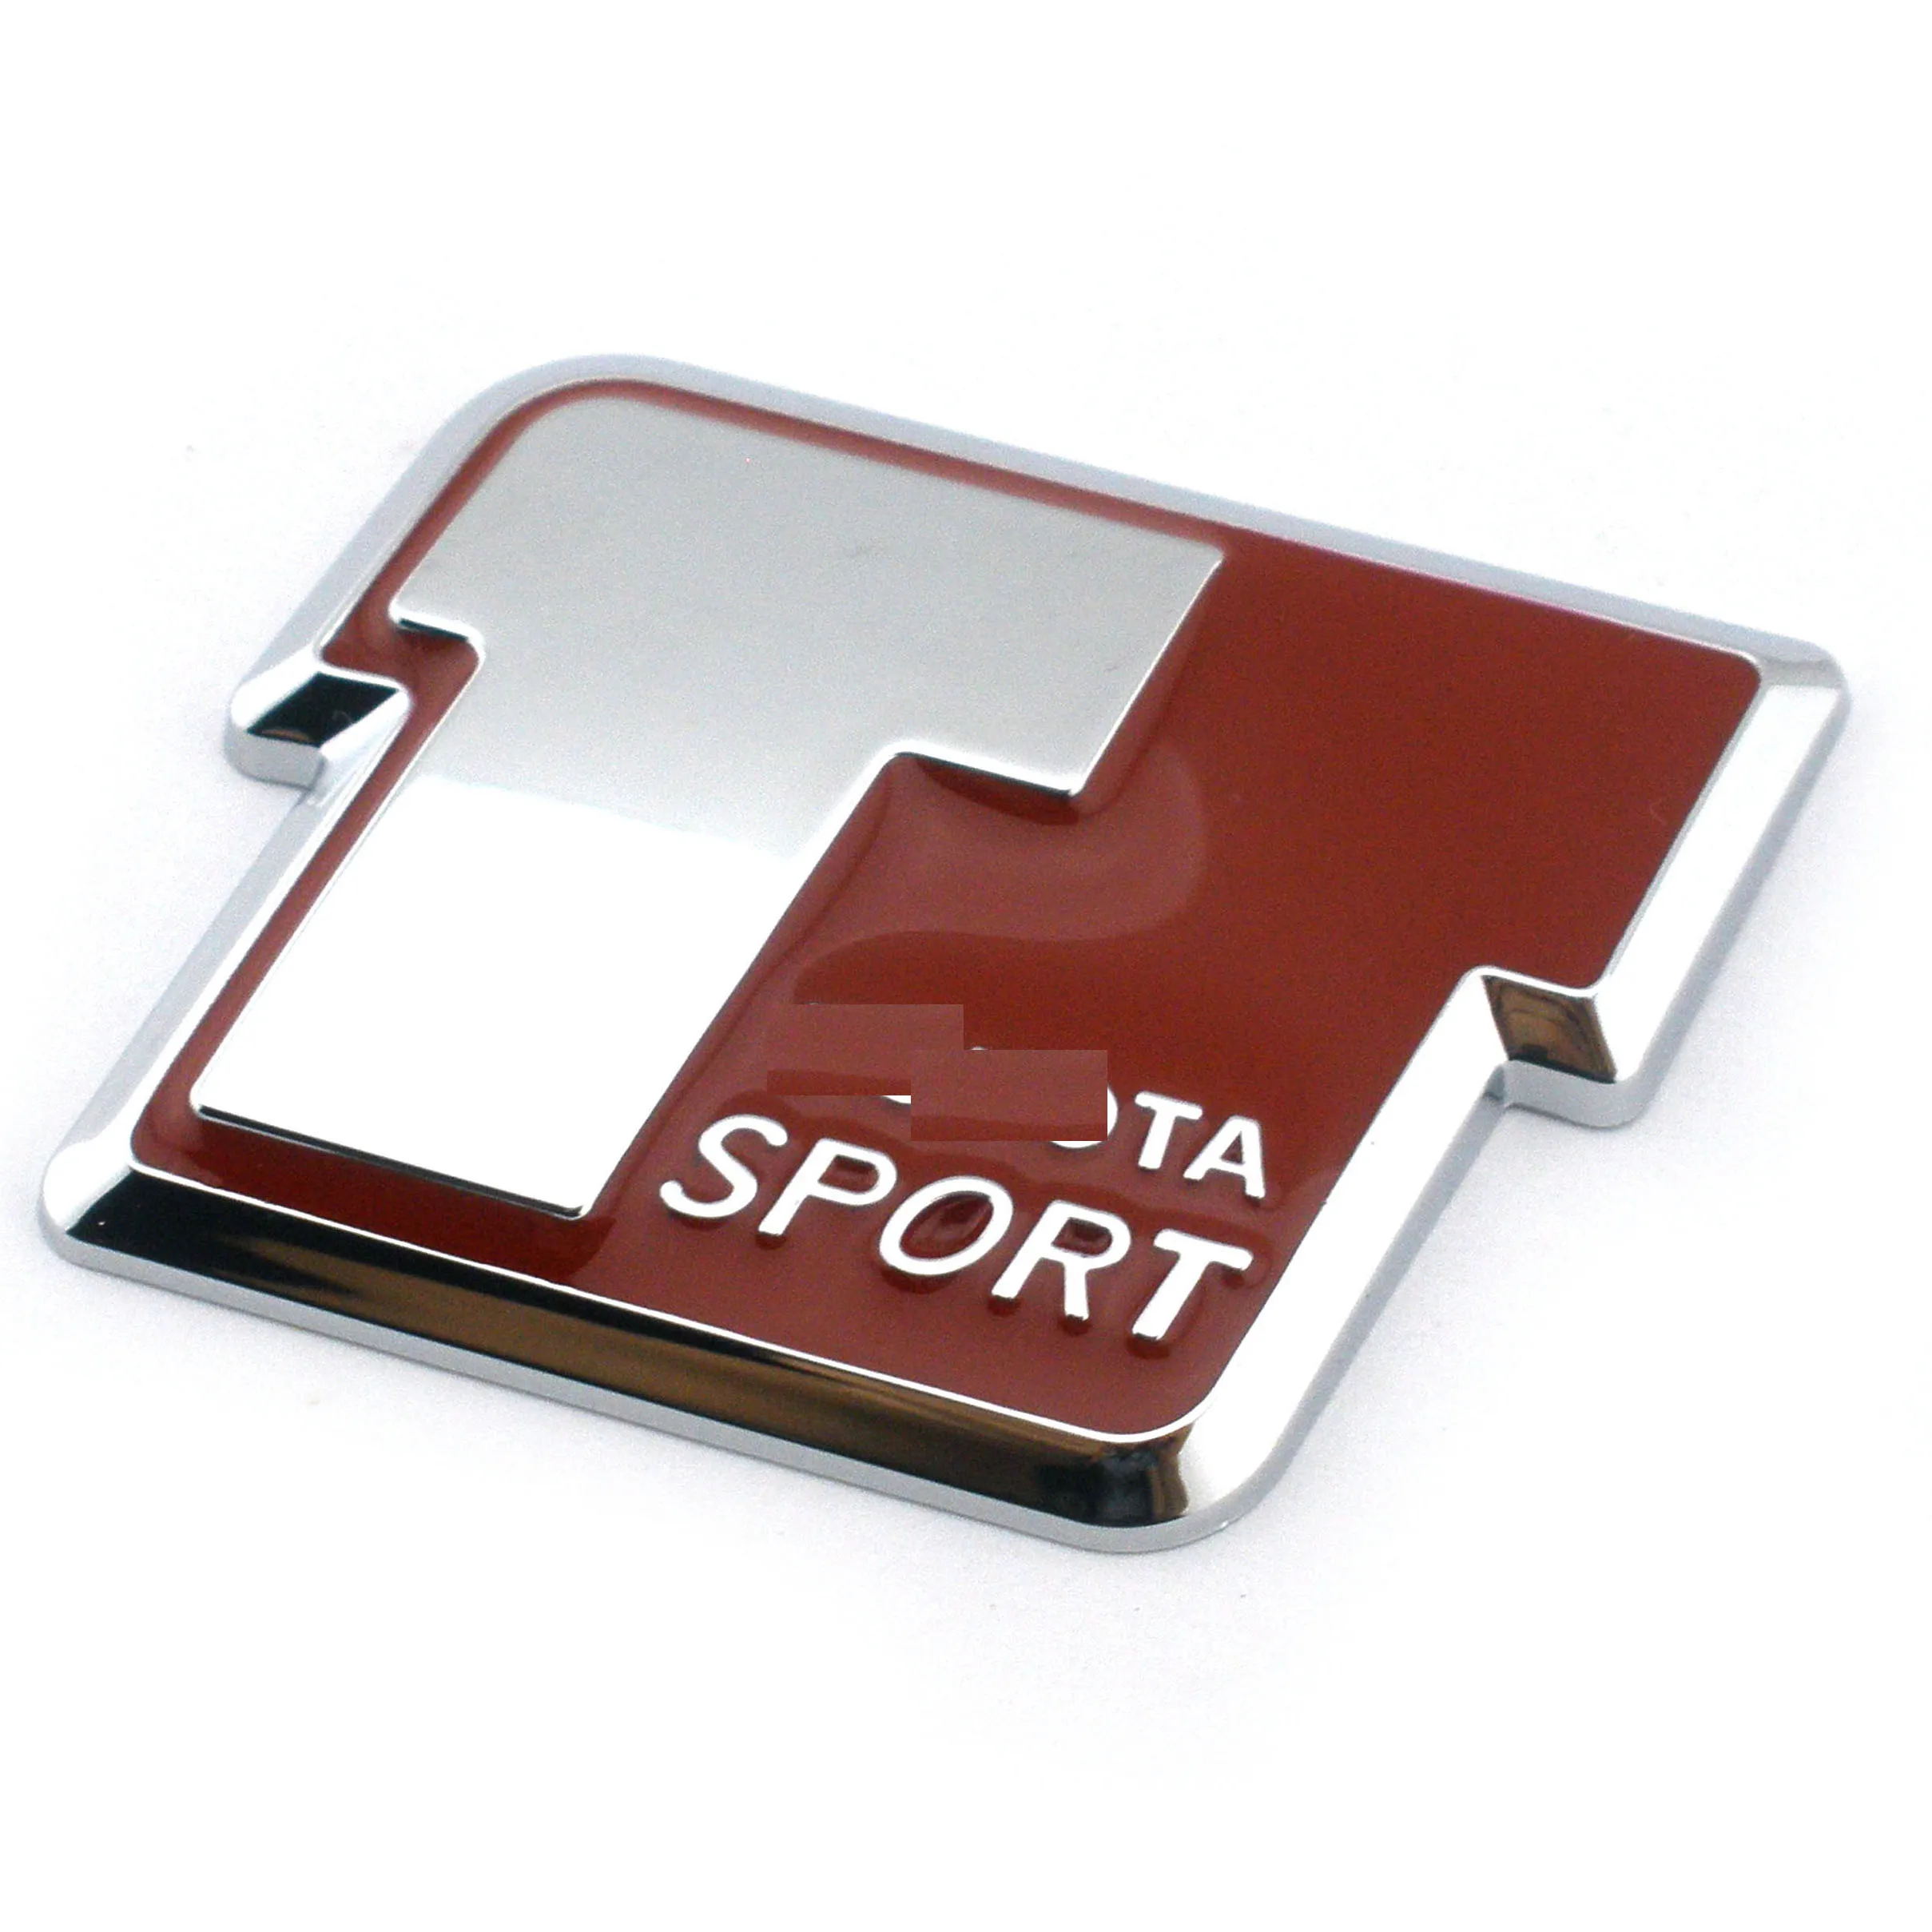 

3D T sport auto emblem trunk badge car sticker for Toyota Yaris RAV4 Corolla Prado Tundra Highlander Hiace Venza Camry